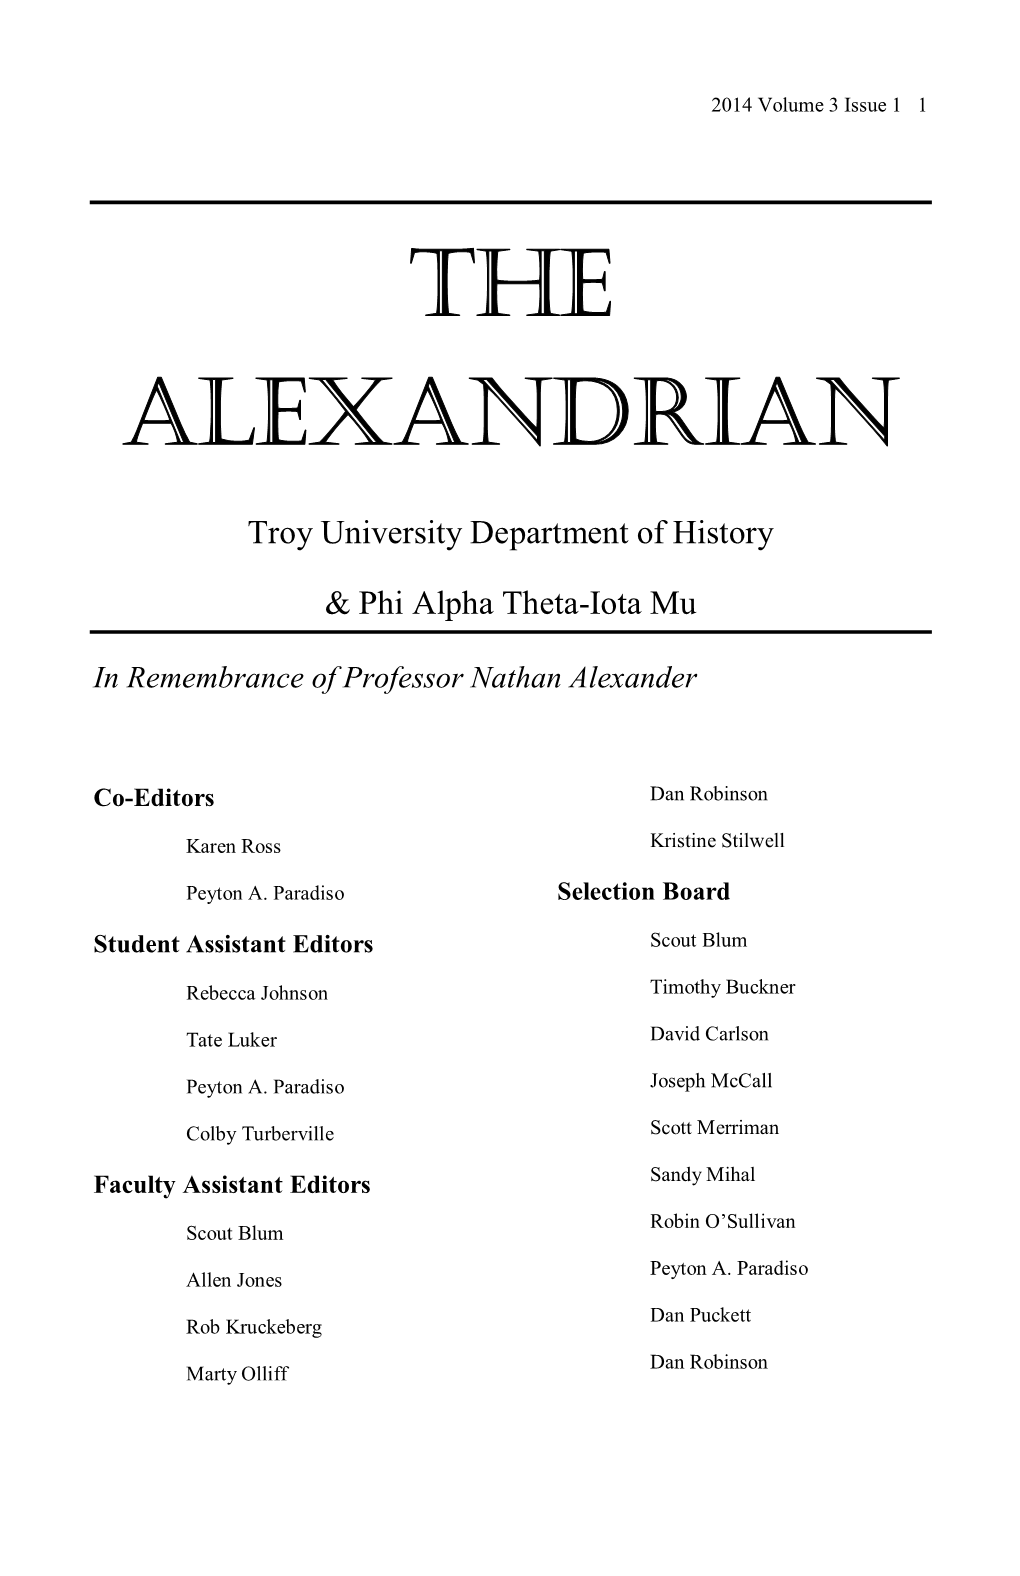 The Alexandrian